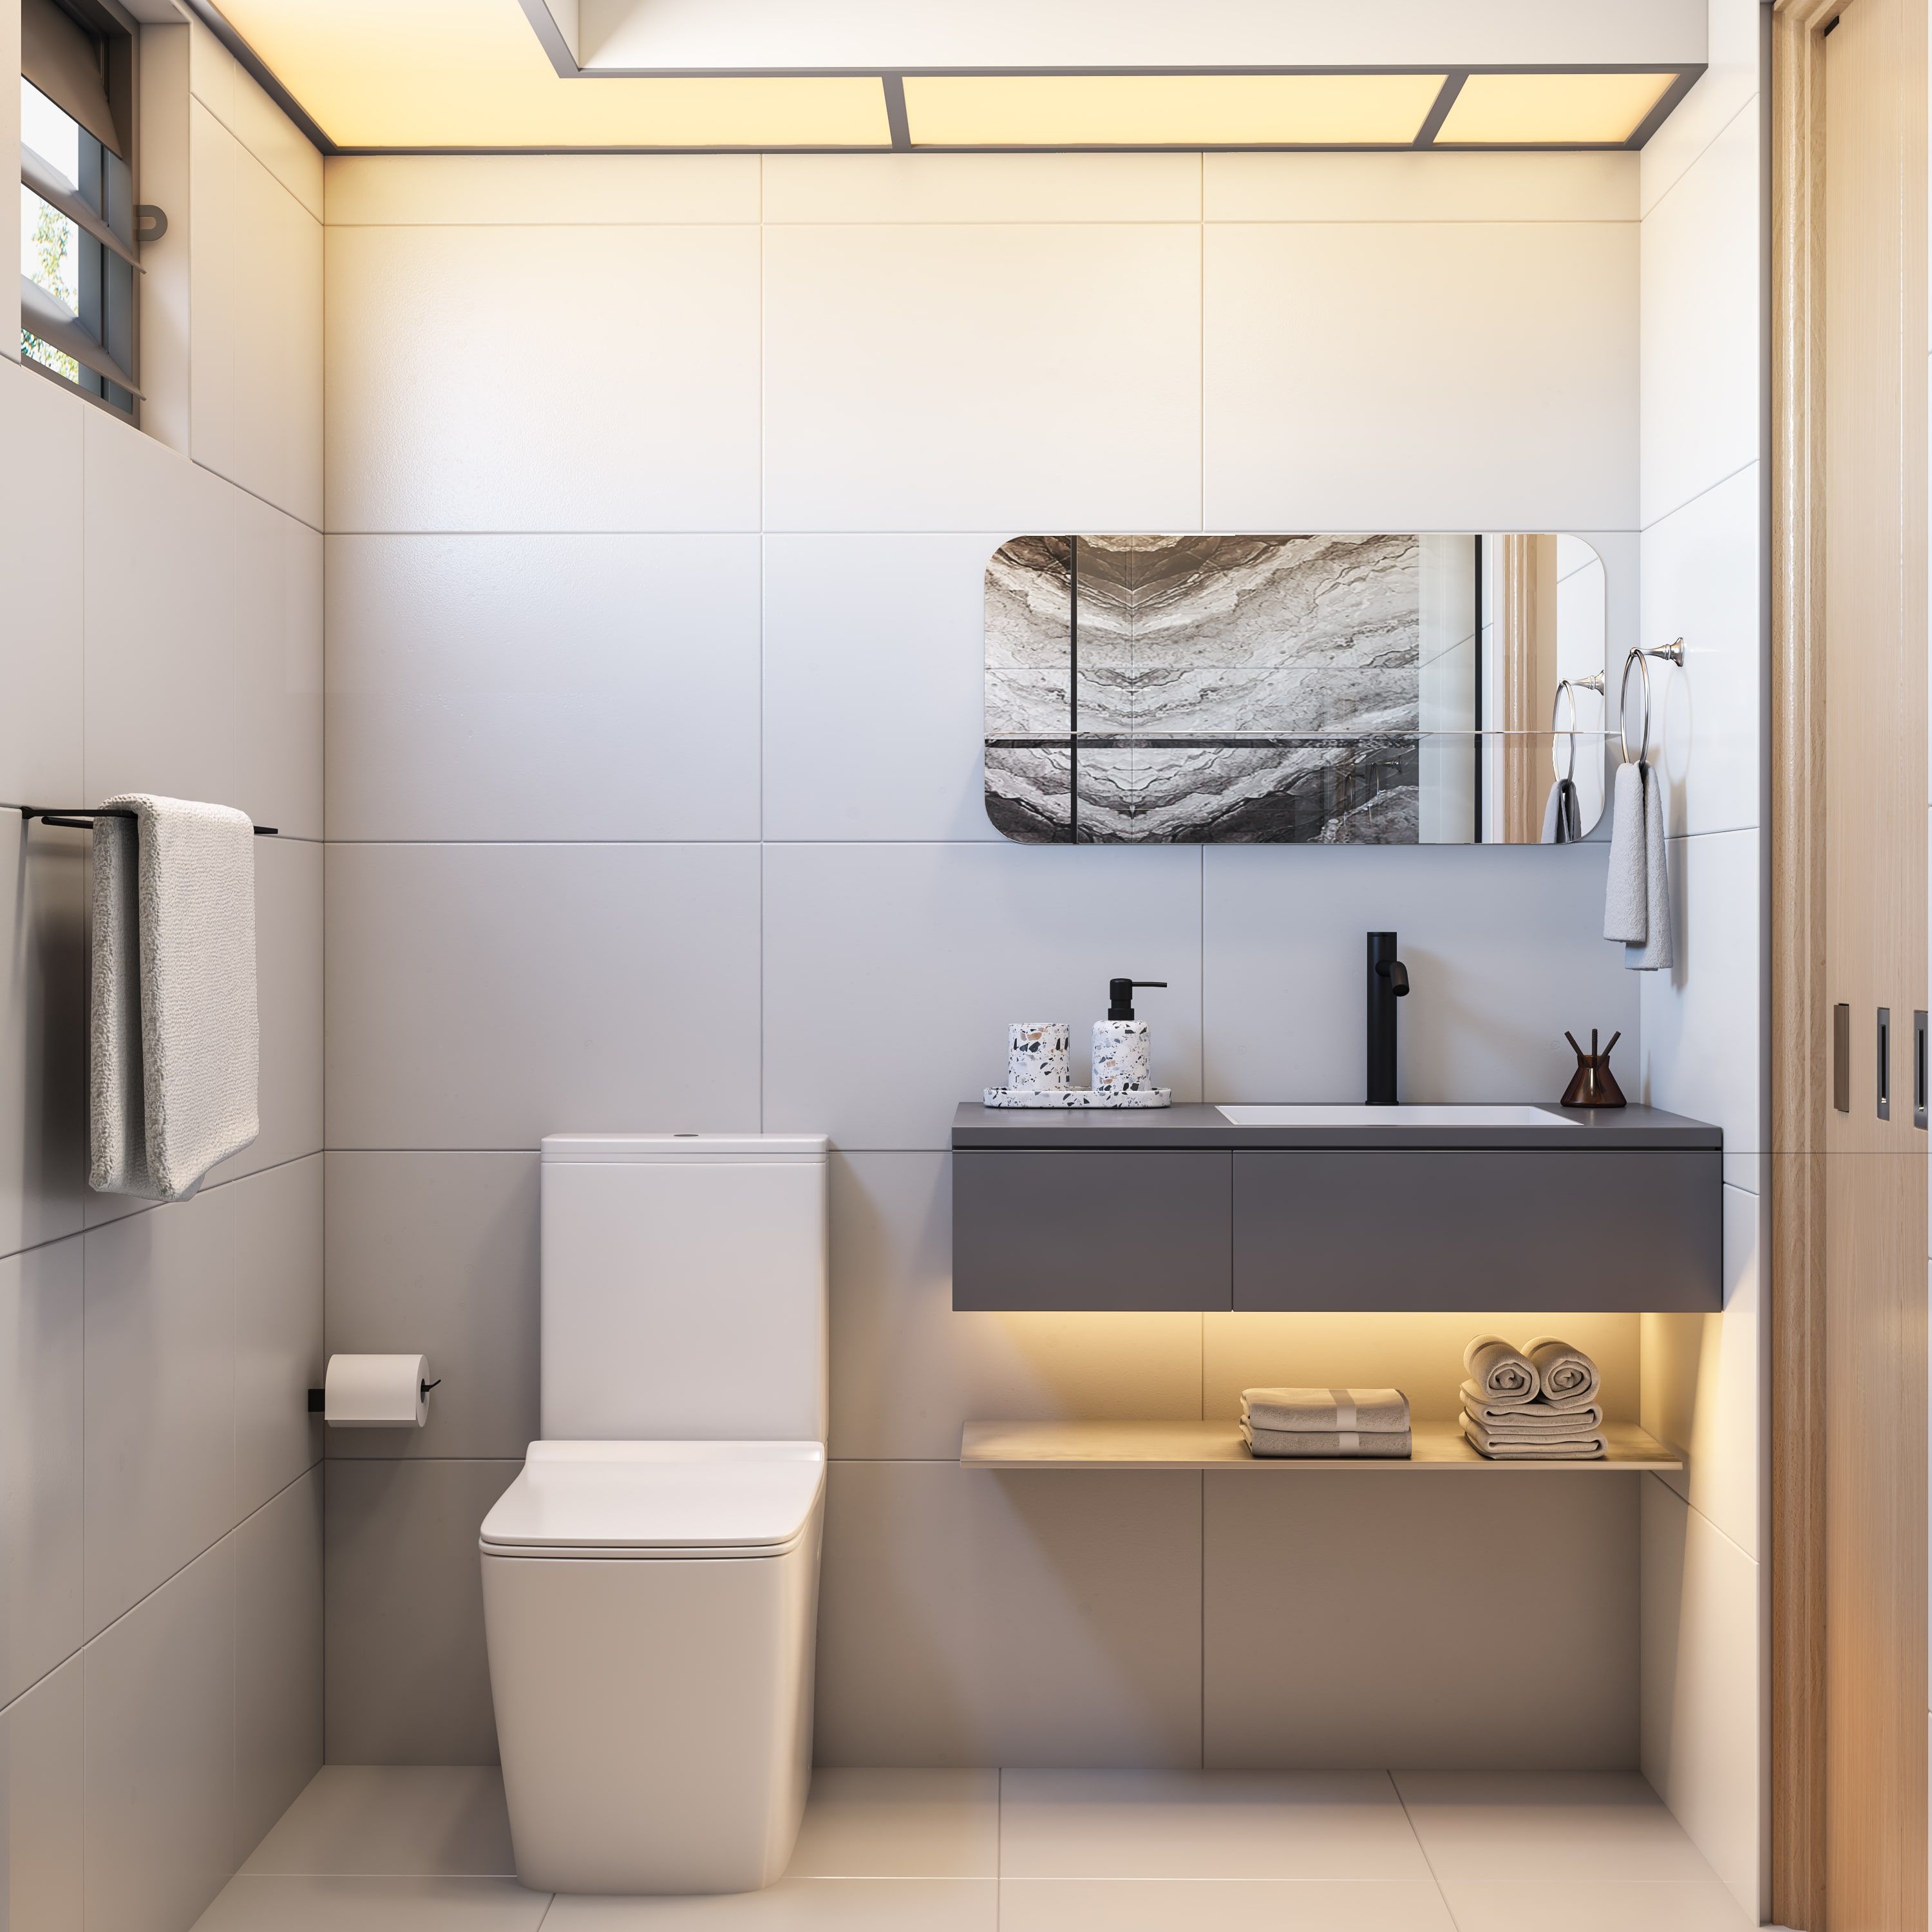 Modern Bathroom Design With Storage Cabinets